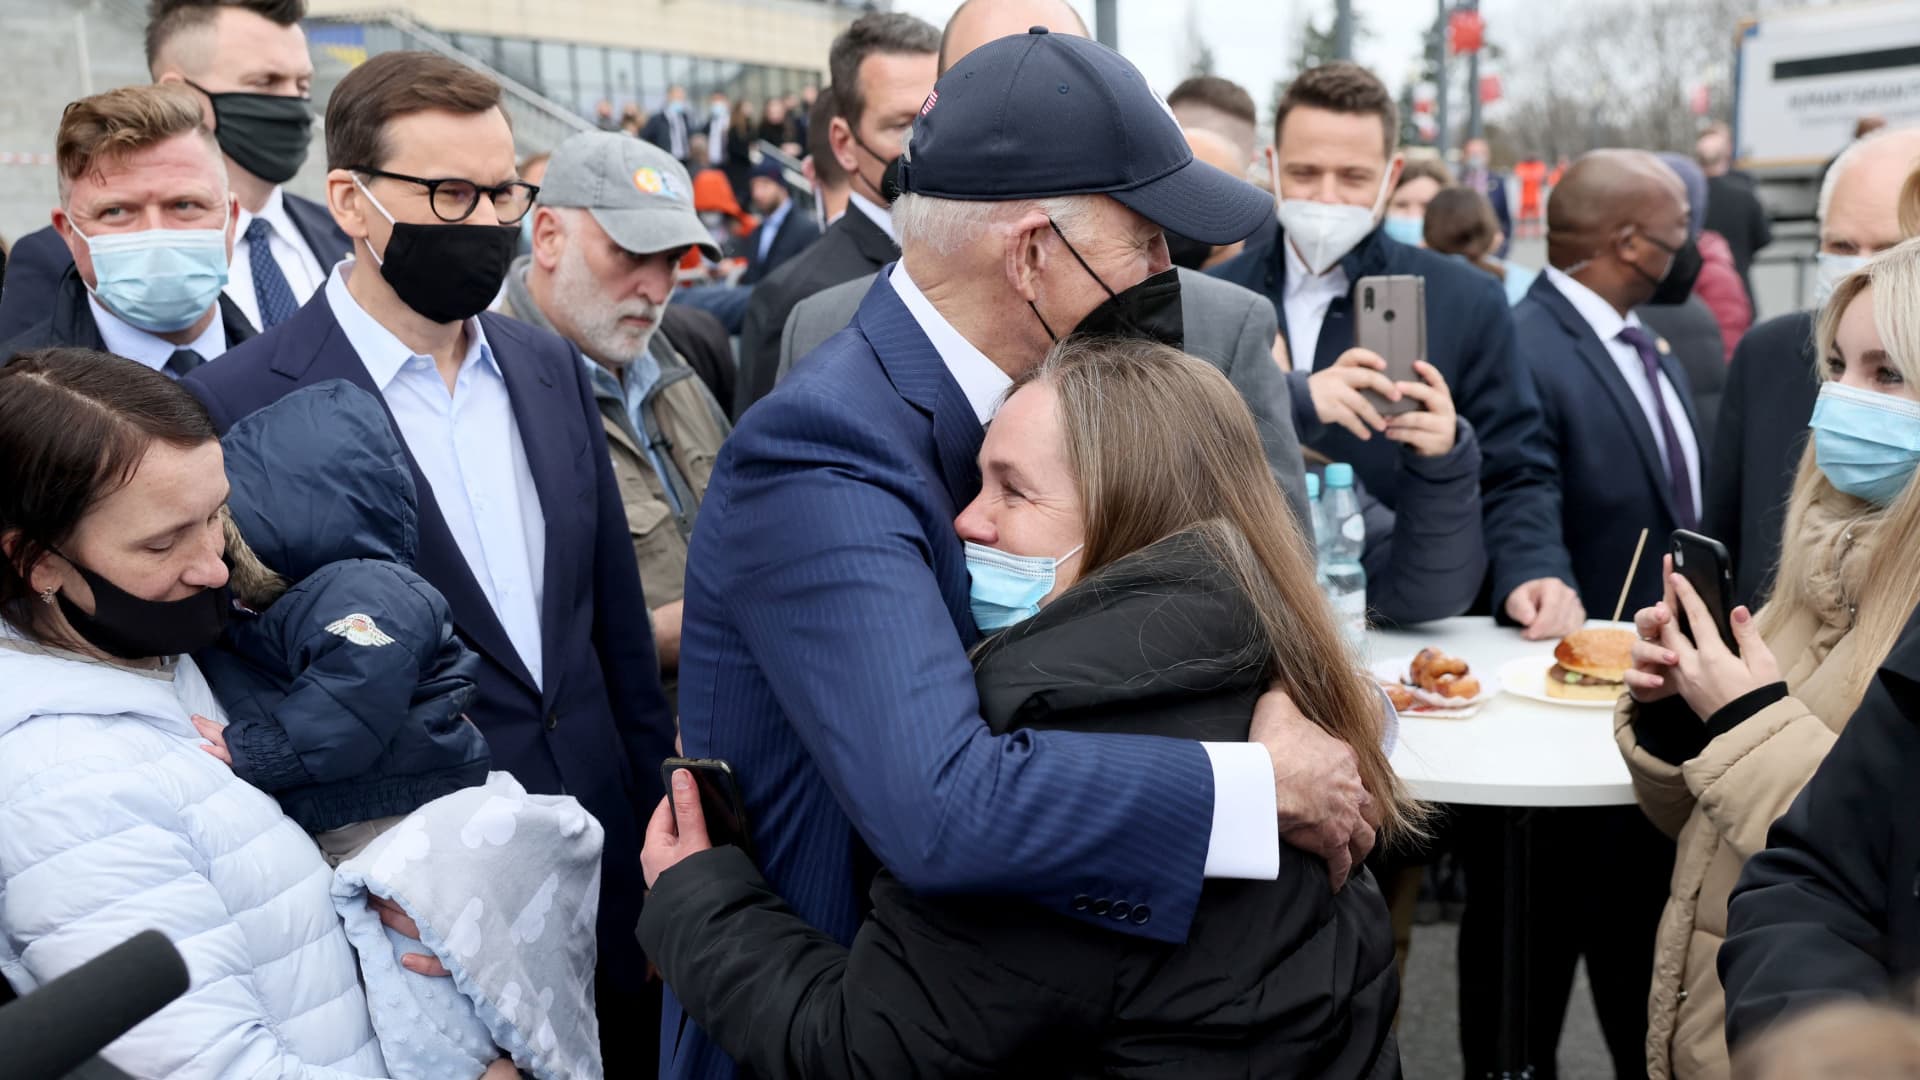 President Joe Biden, flanked by Mayor of Warsaw Rafal Trzaskowski and Polish Prime Minister Mateusz Morawiecki, hugs a woman as he visits Ukrainian refugees at the PGE National Stadium, in Warsaw, Poland March 26, 2022.